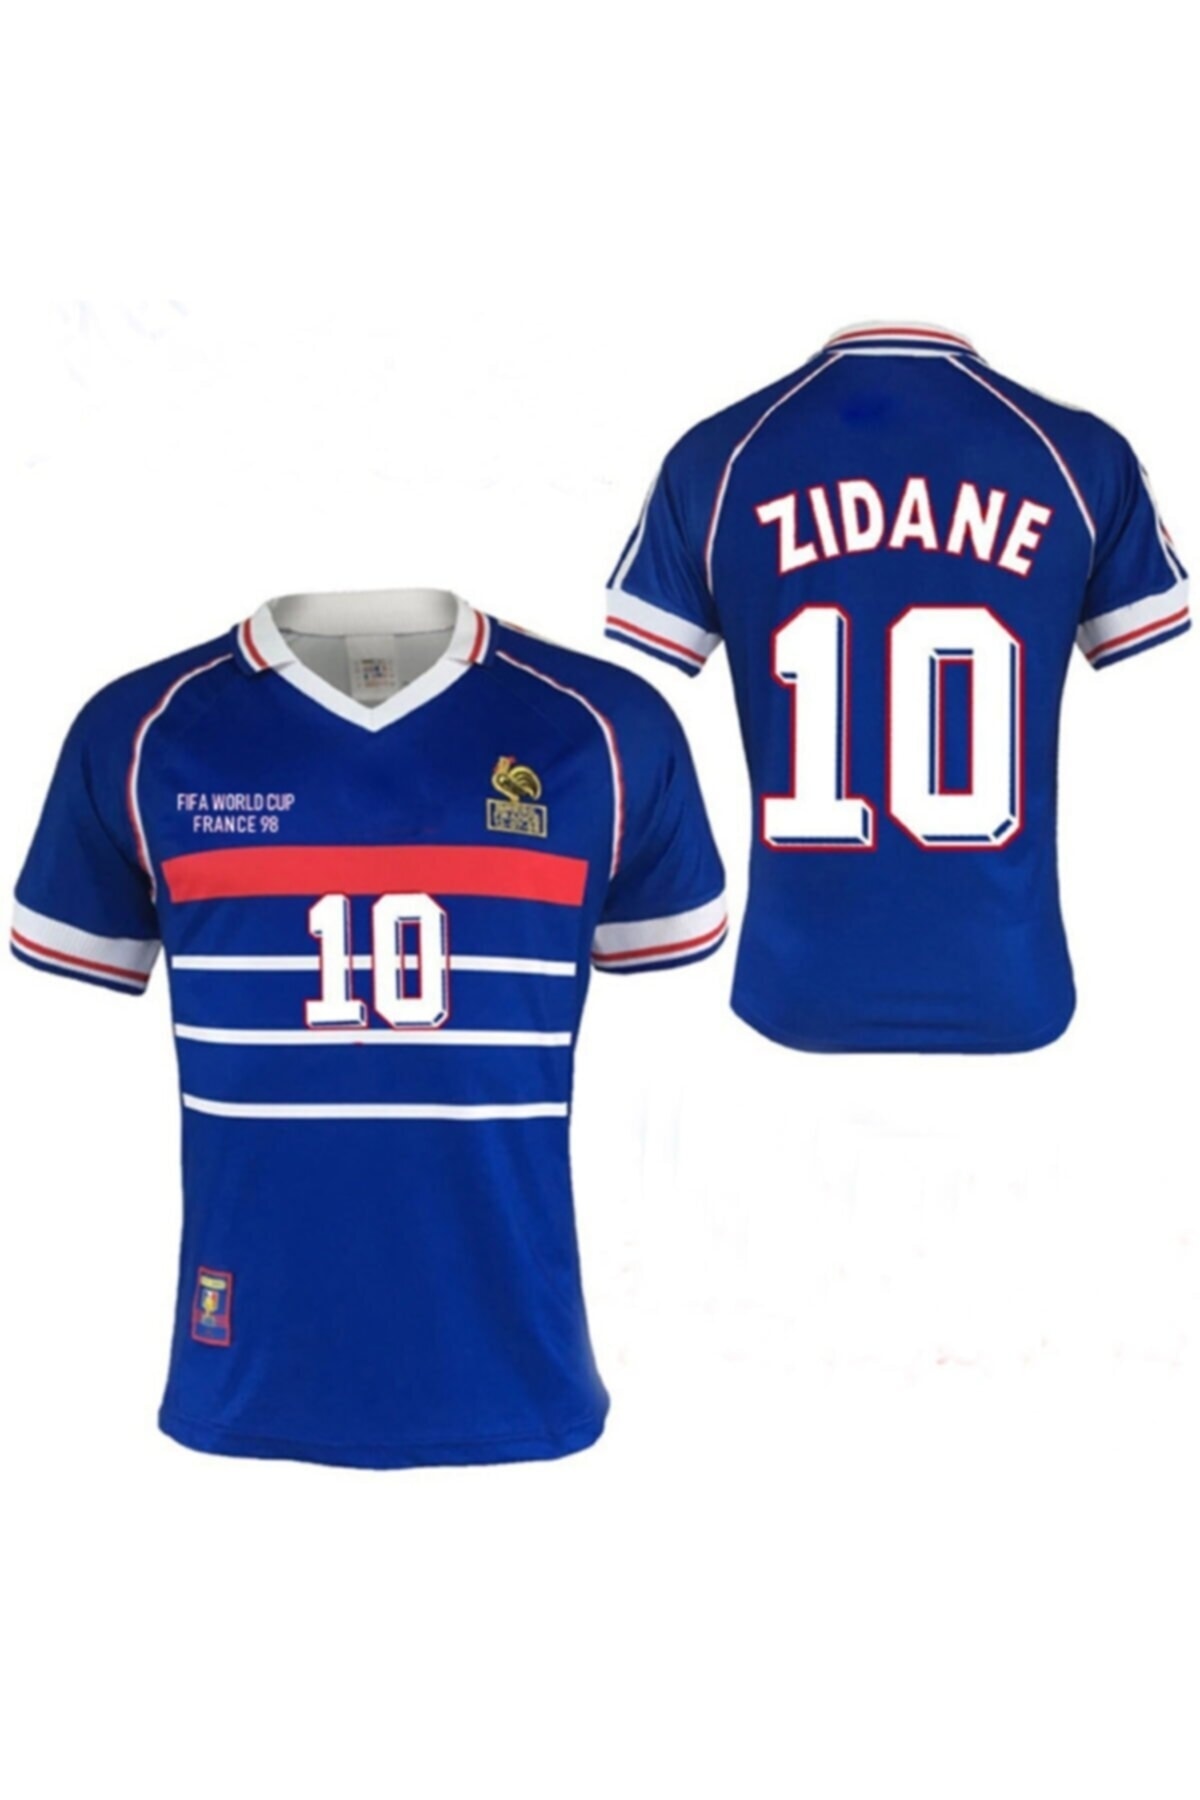 Pasxaspor Fransa 1998 Retro Zidane Forması